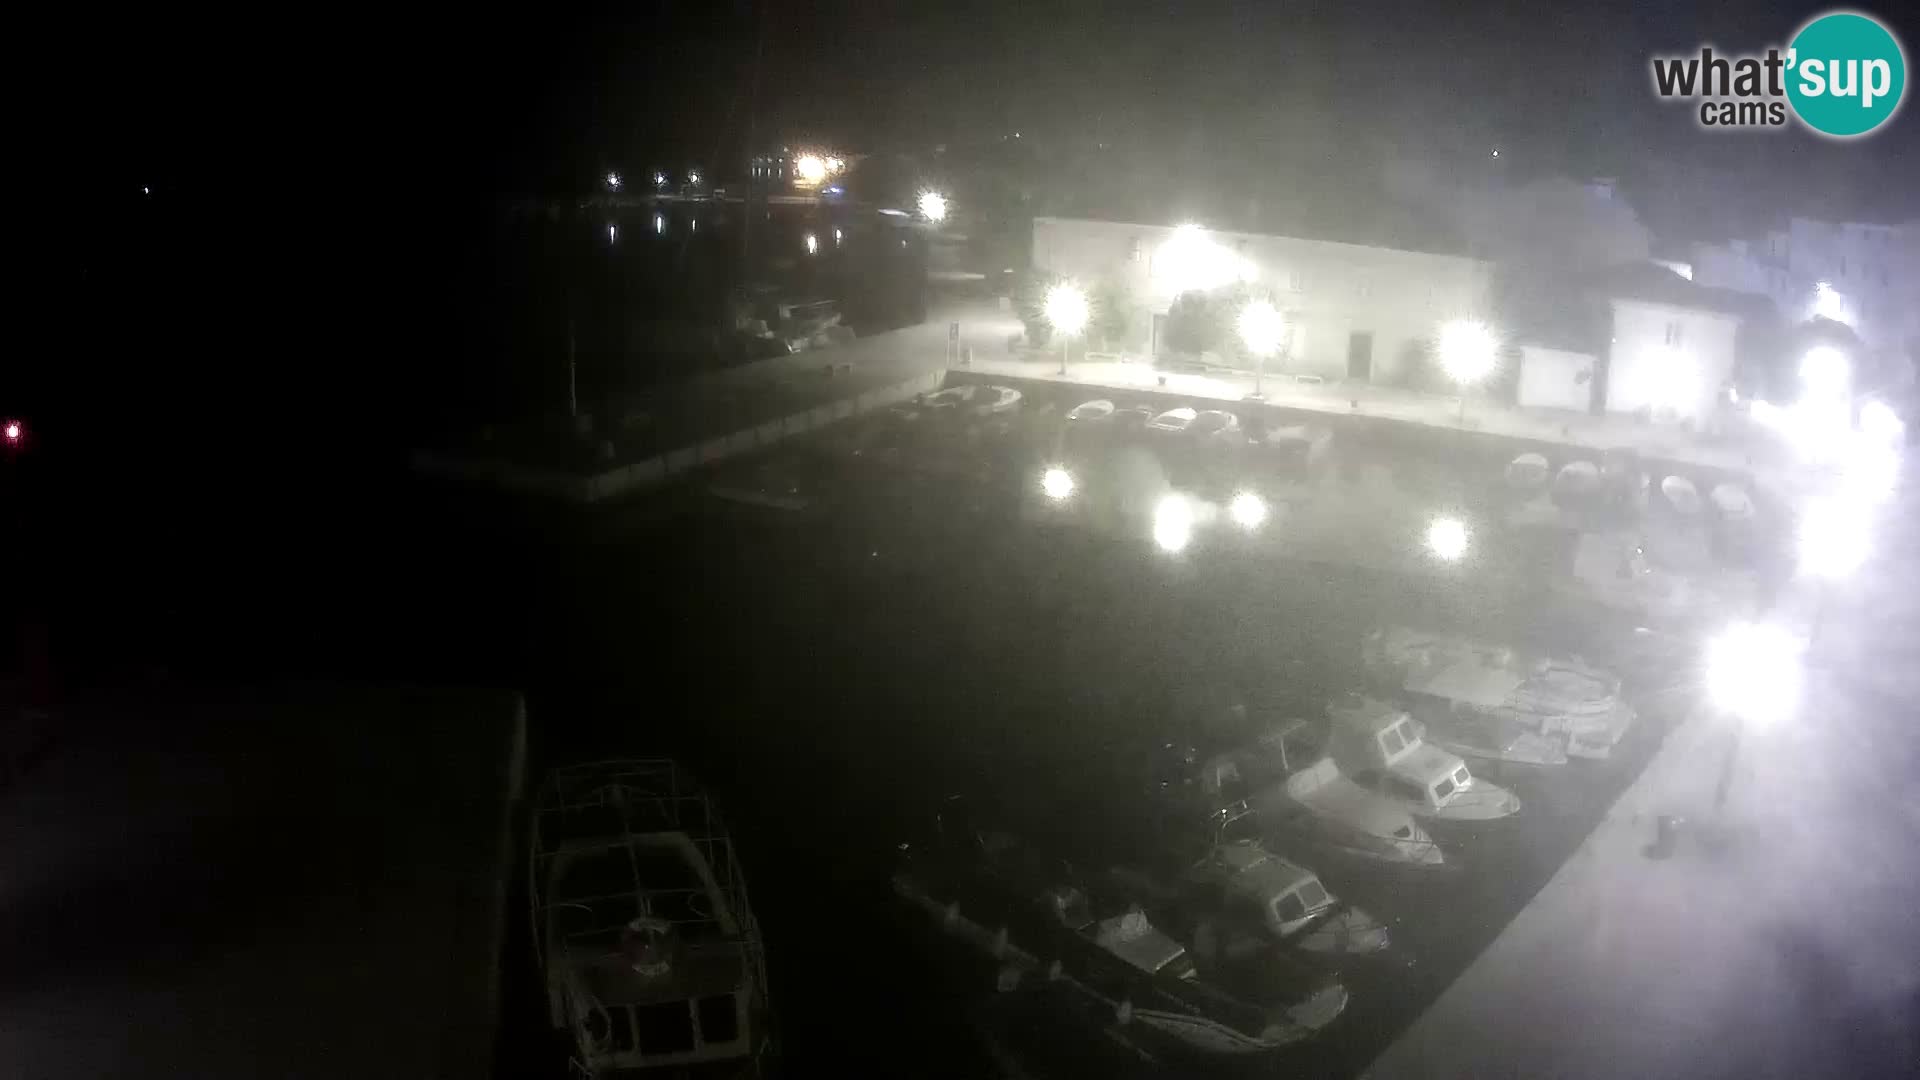 Pag webcam – town marina